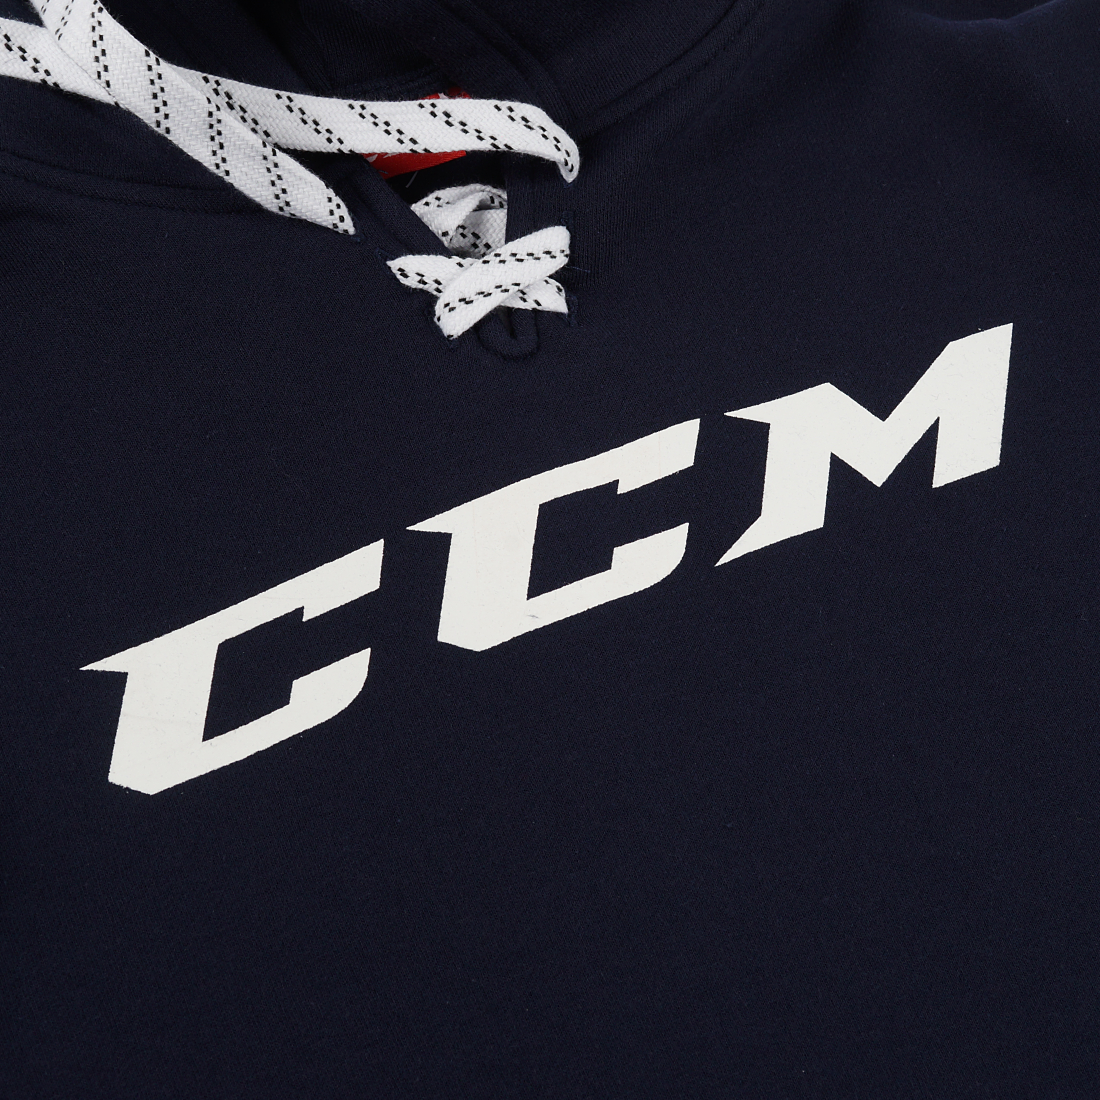  CCM Logo Hoody NV JR